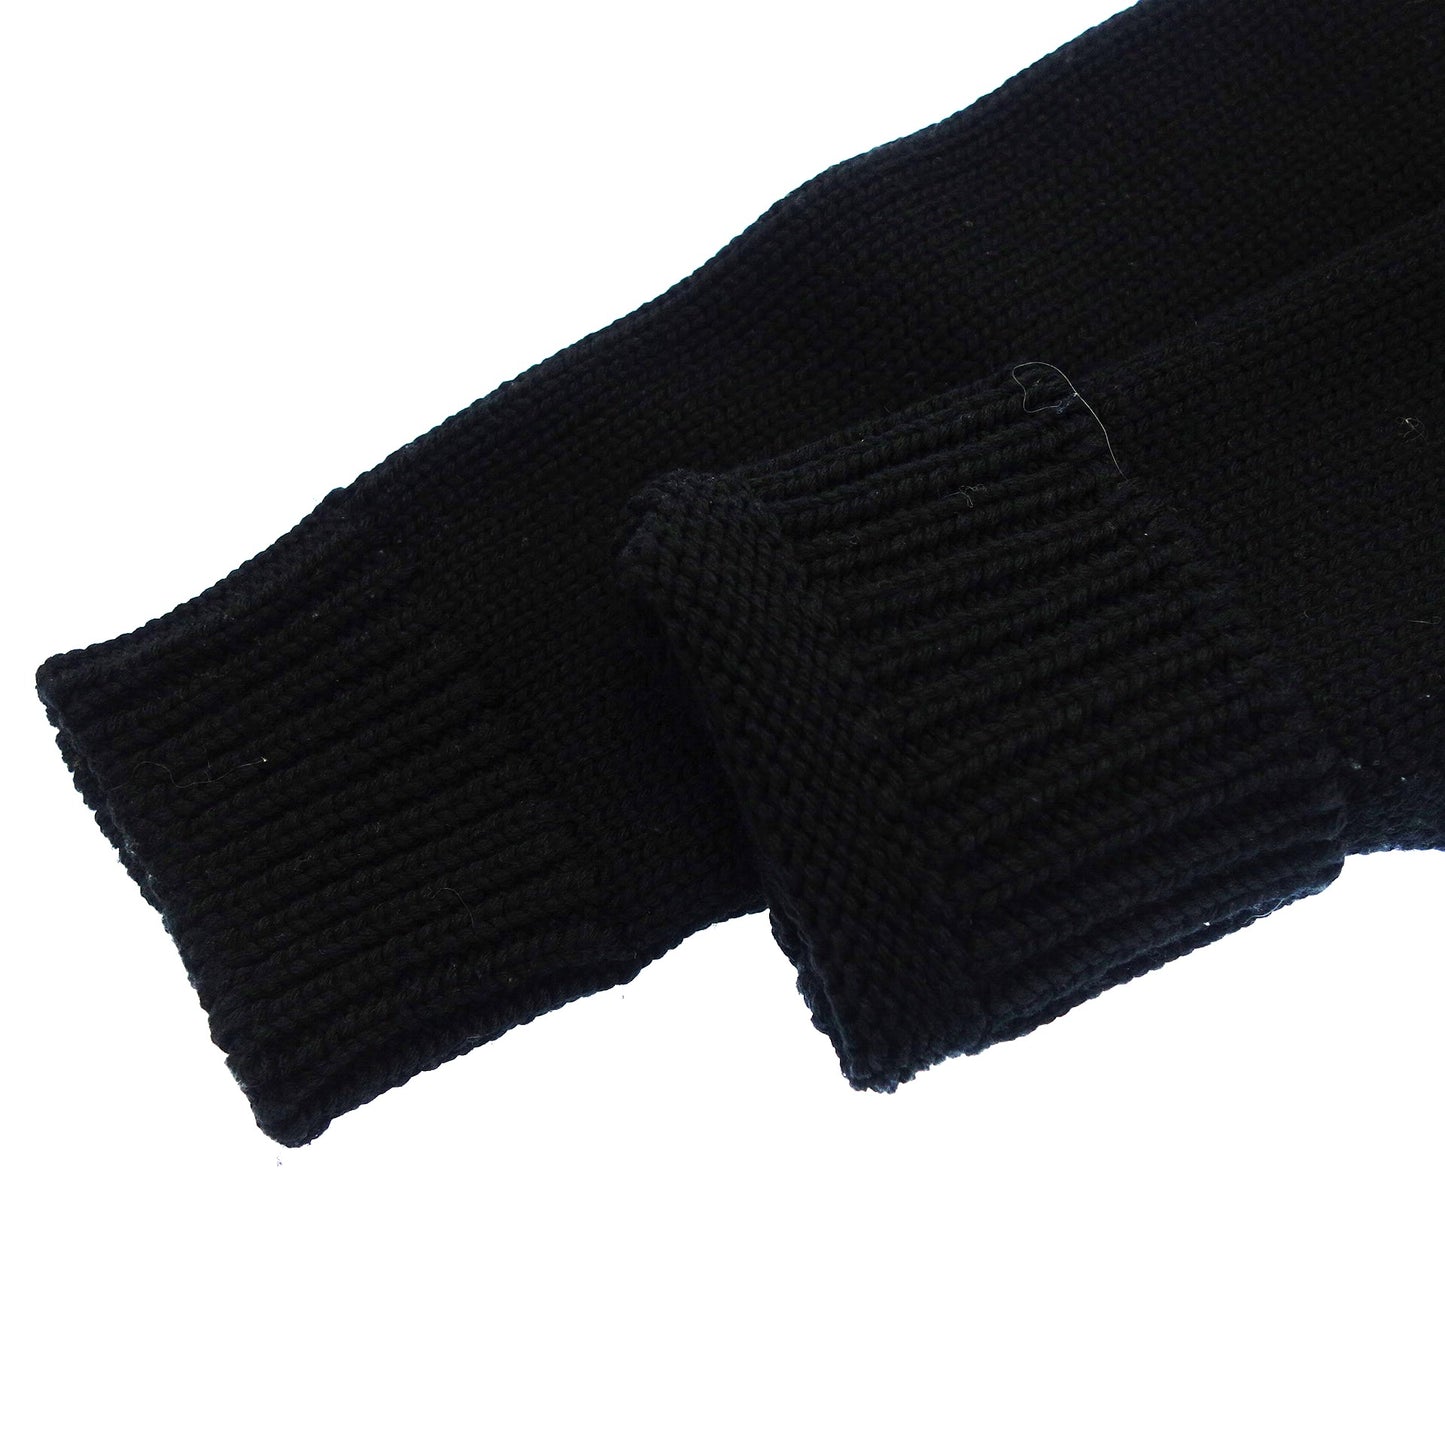 FENDI Knit Sweater Front Logo Kagiami Men's 46 Black FENDI [AFB40] [Used] 